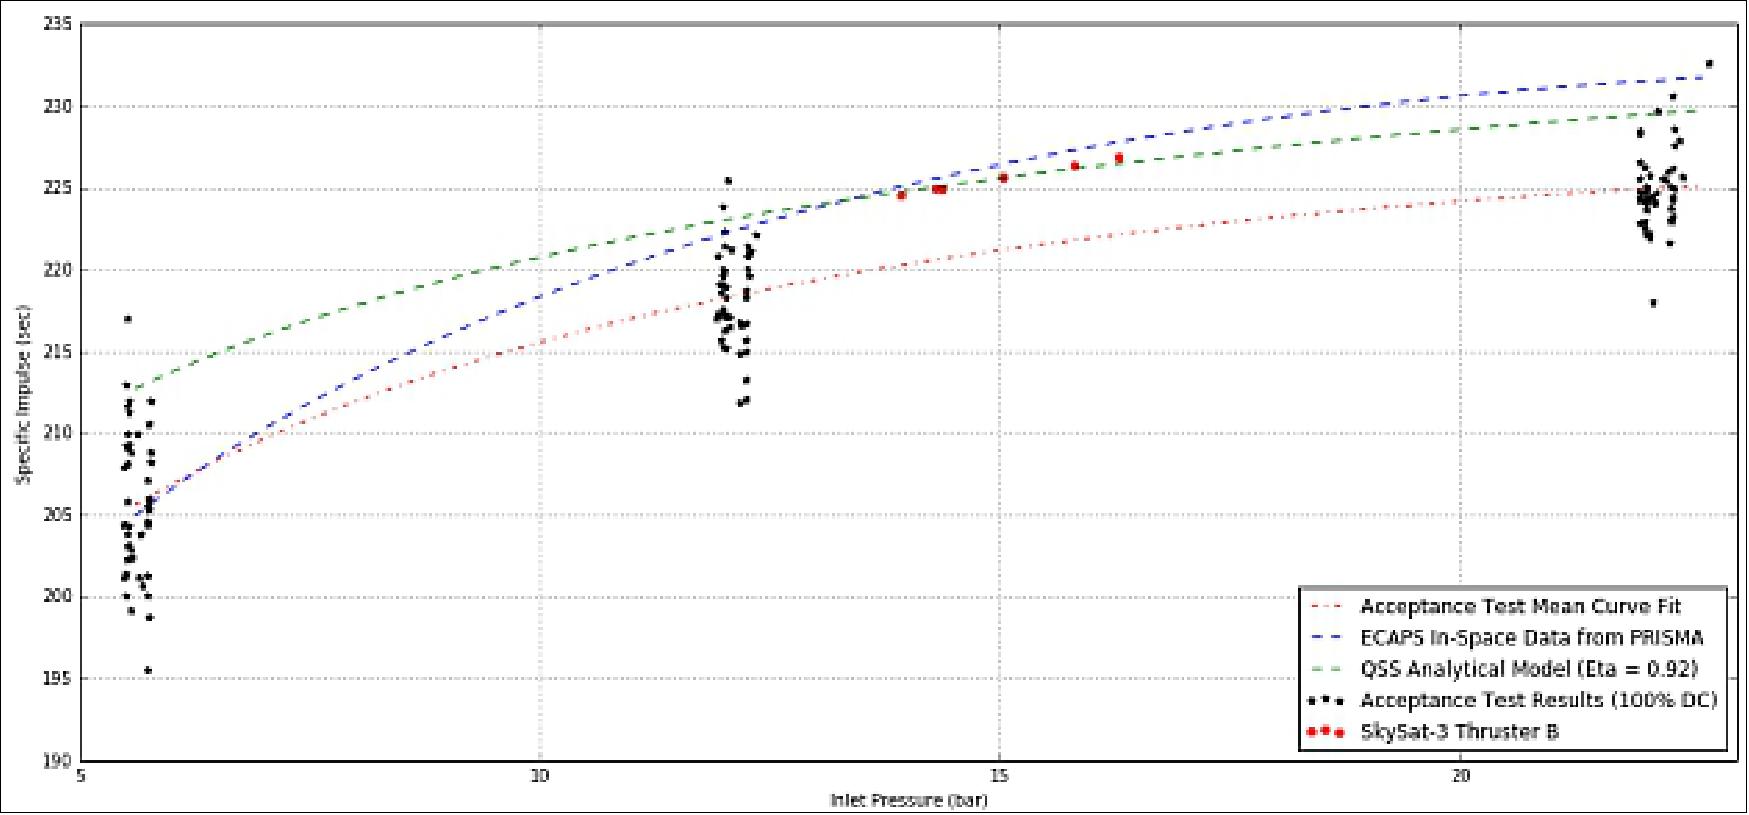 Figure 21: Comparison of On-Orbit Steady-State Performance vs. Pre-Flight Predictions (image credit: ECAPS)